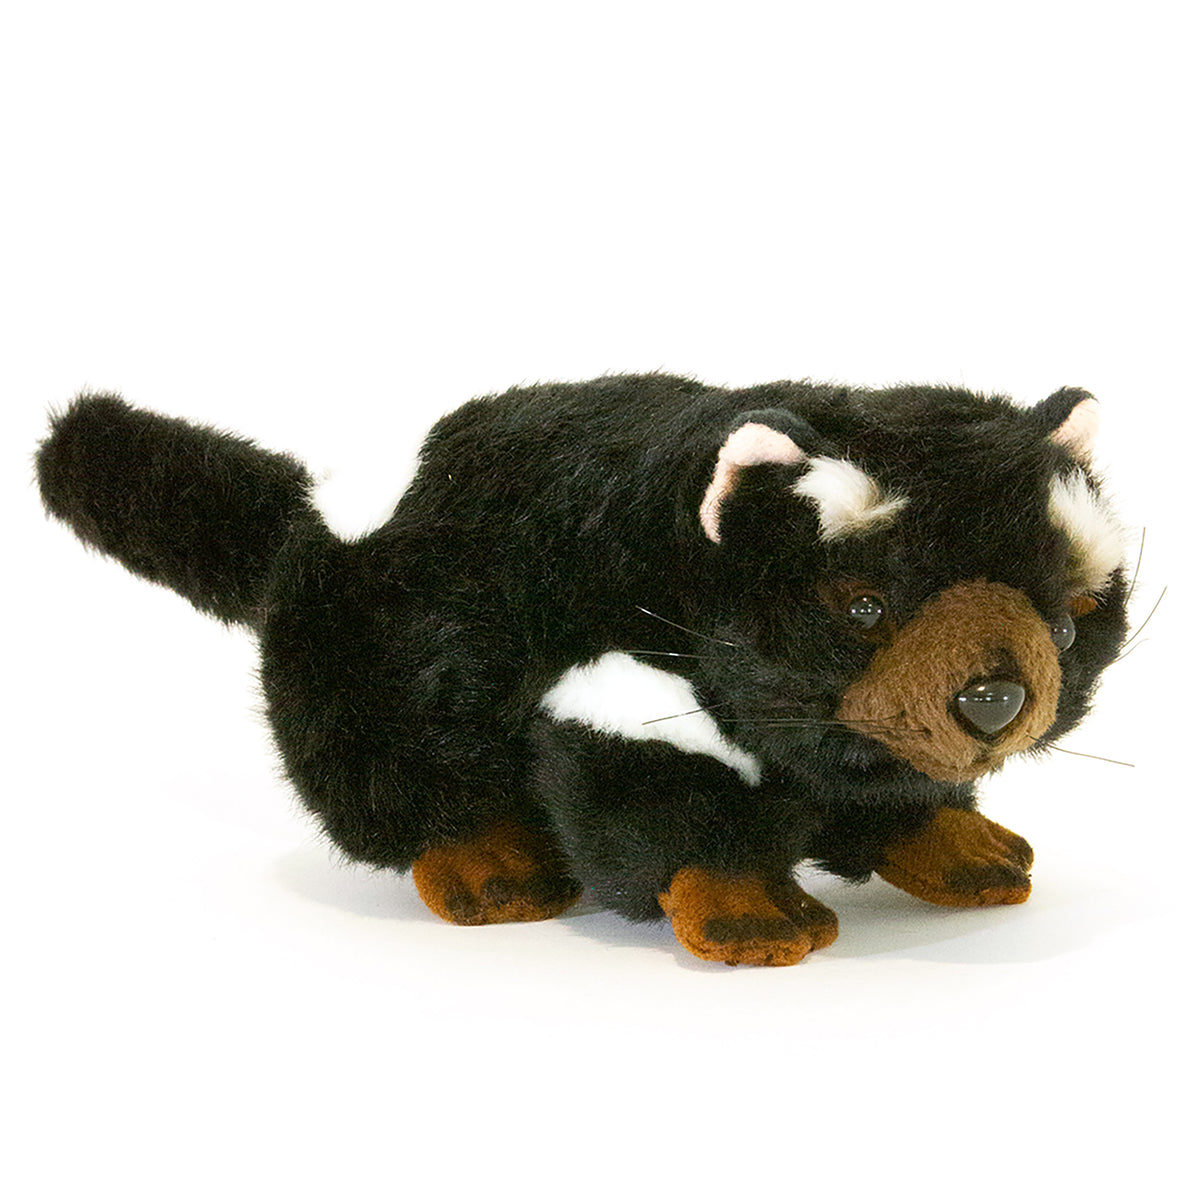 Boccetta Plush Toys Tazzy the Tasmanian Devil